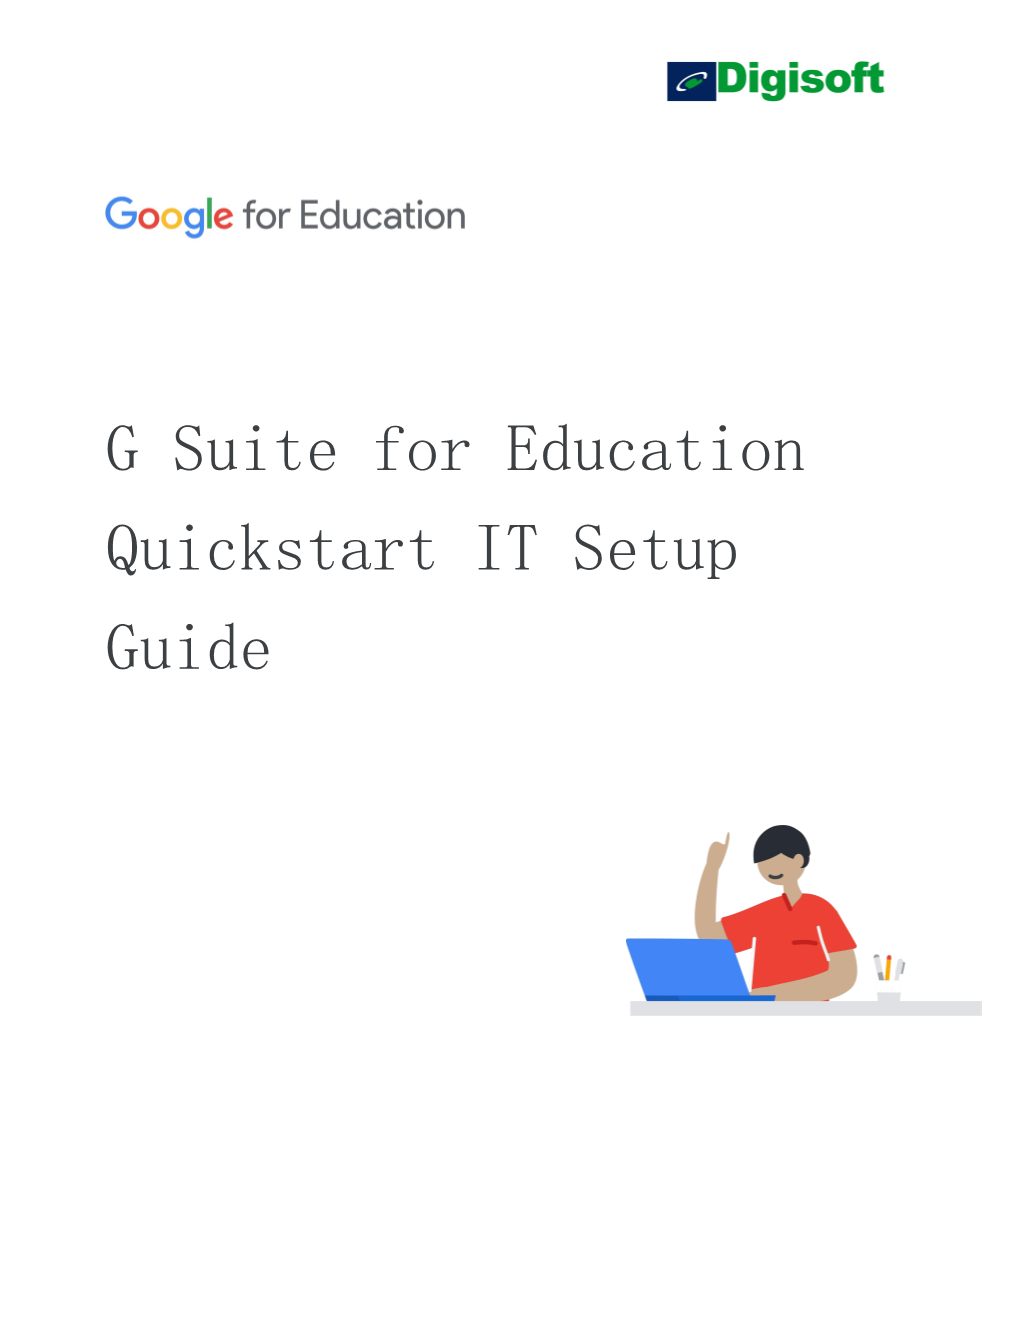 Google for Education Quickstart Setup Guide